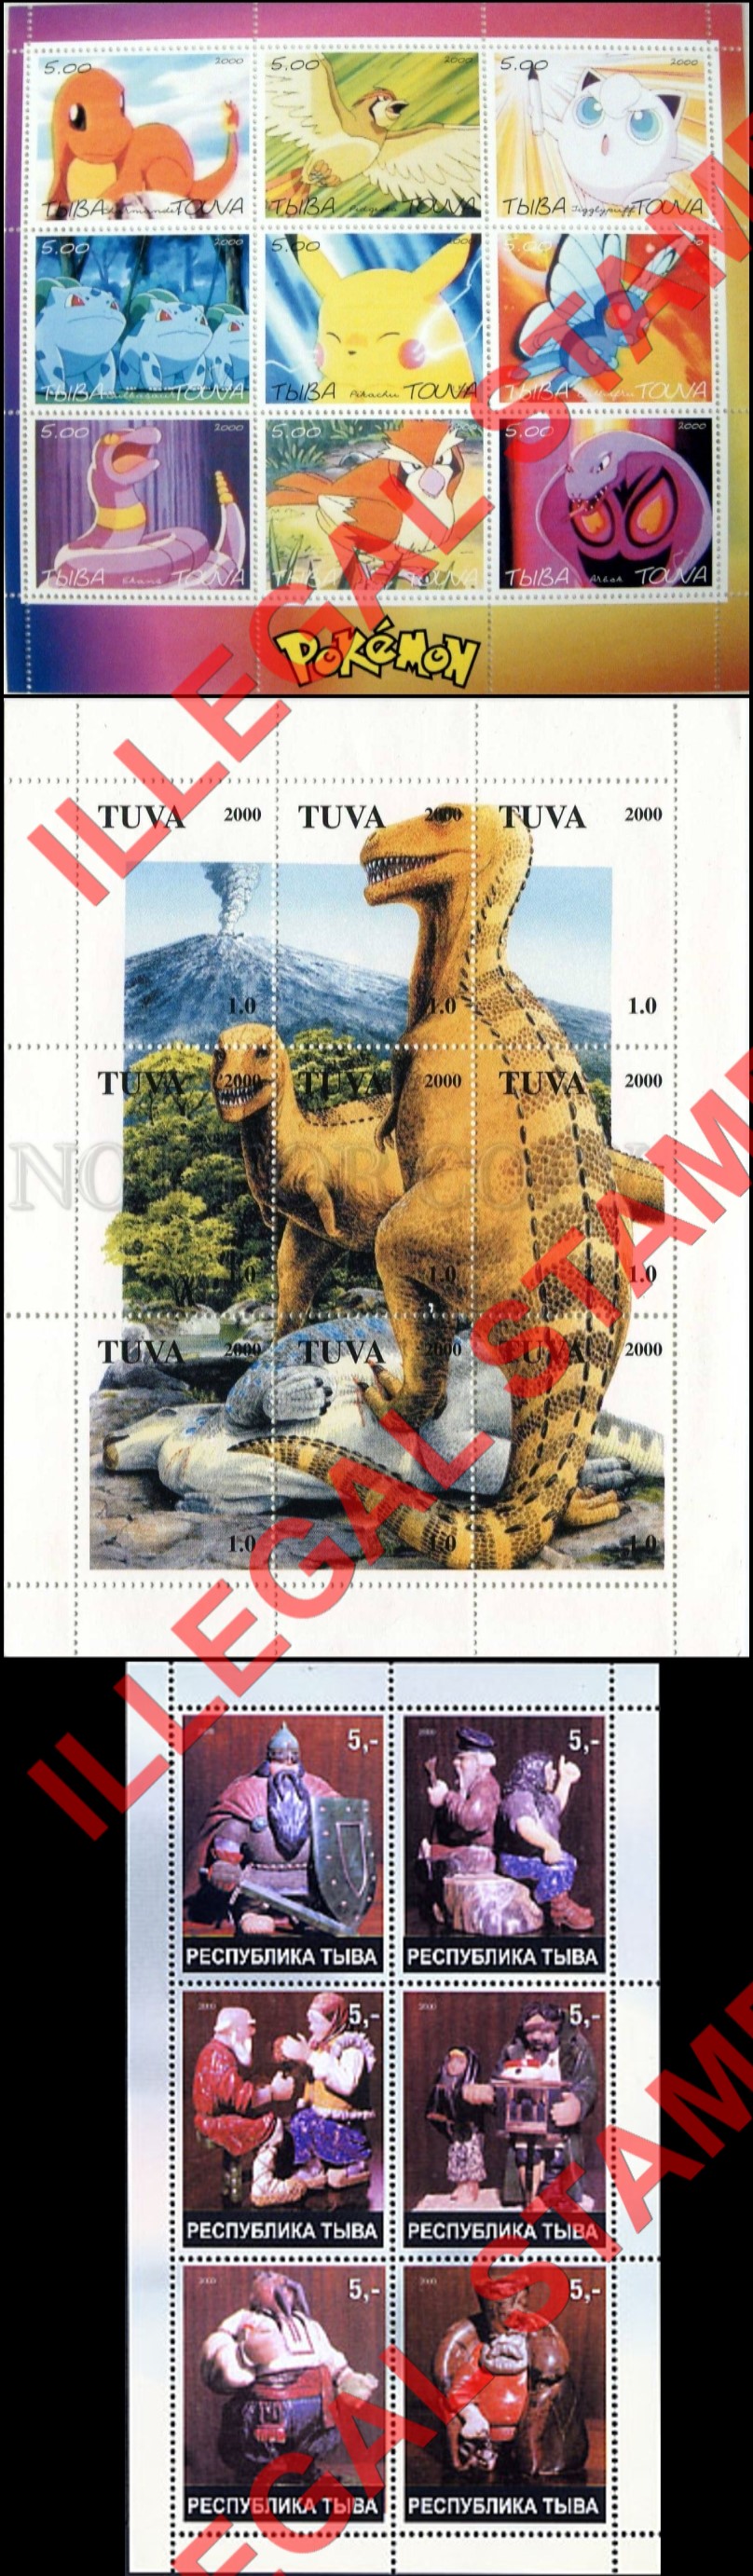 Republic of Tuva 2000 Counterfeit Illegal Stamps (Part 2)